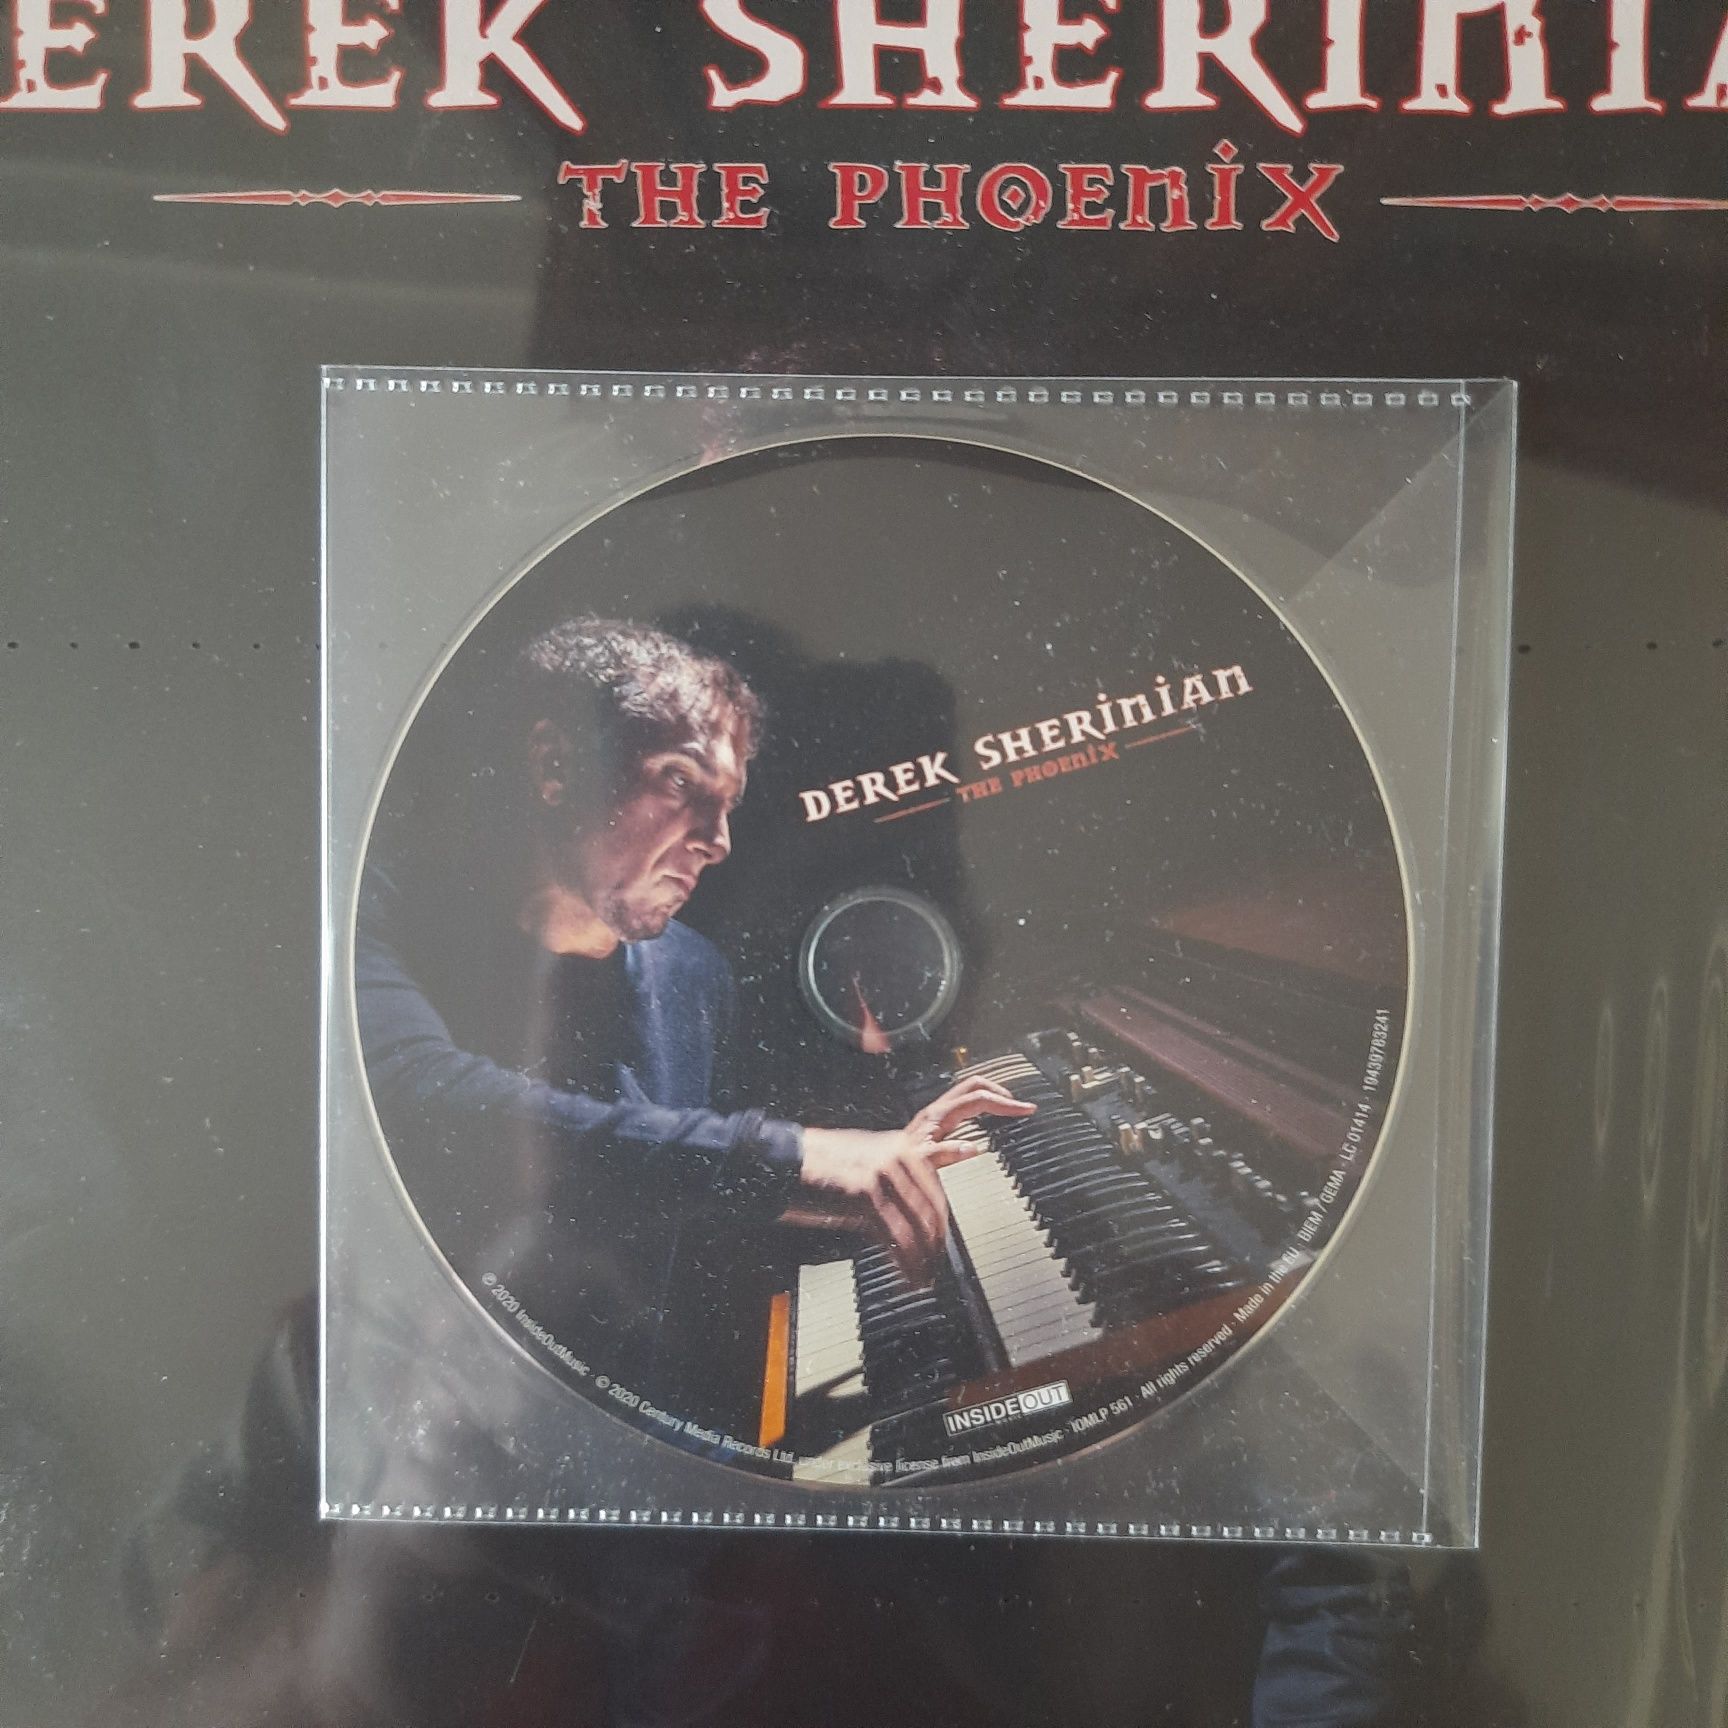 Derek Sherinian – The Phoenix